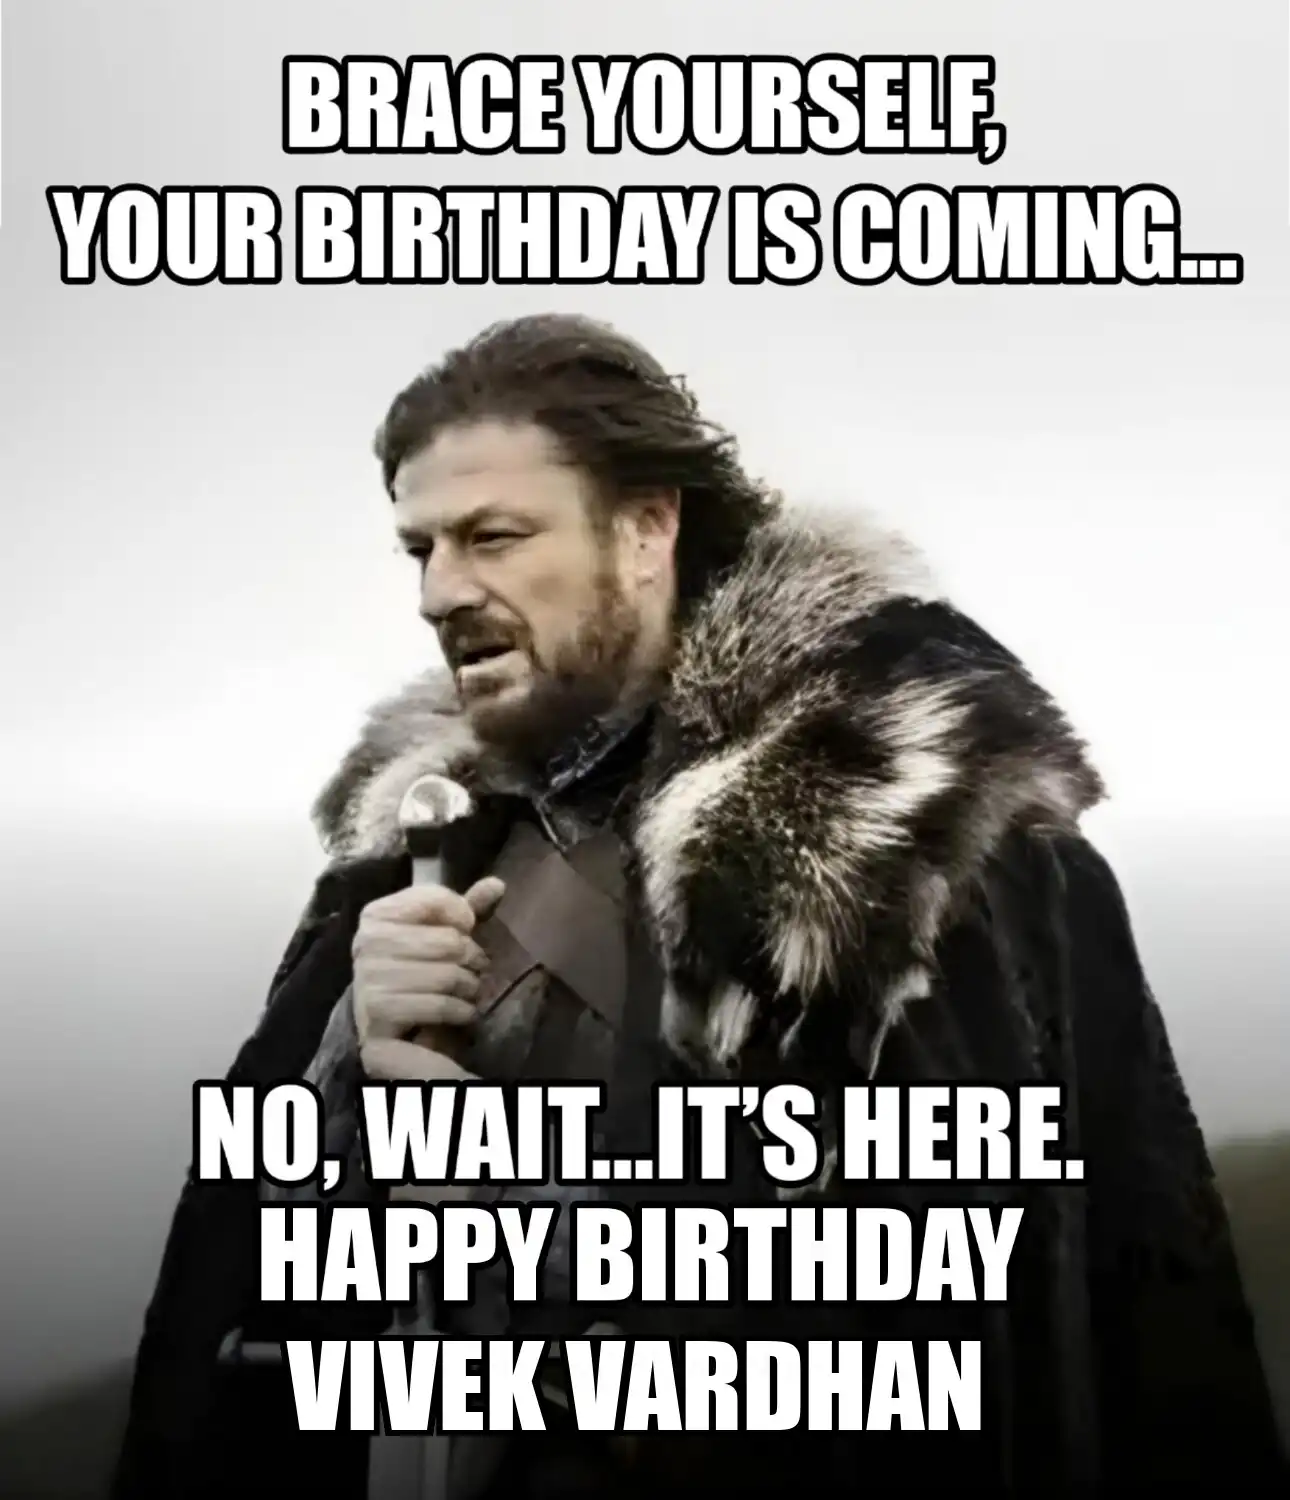 Happy Birthday Vivek Vardhan Brace Yourself Your Birthday Is Coming Meme